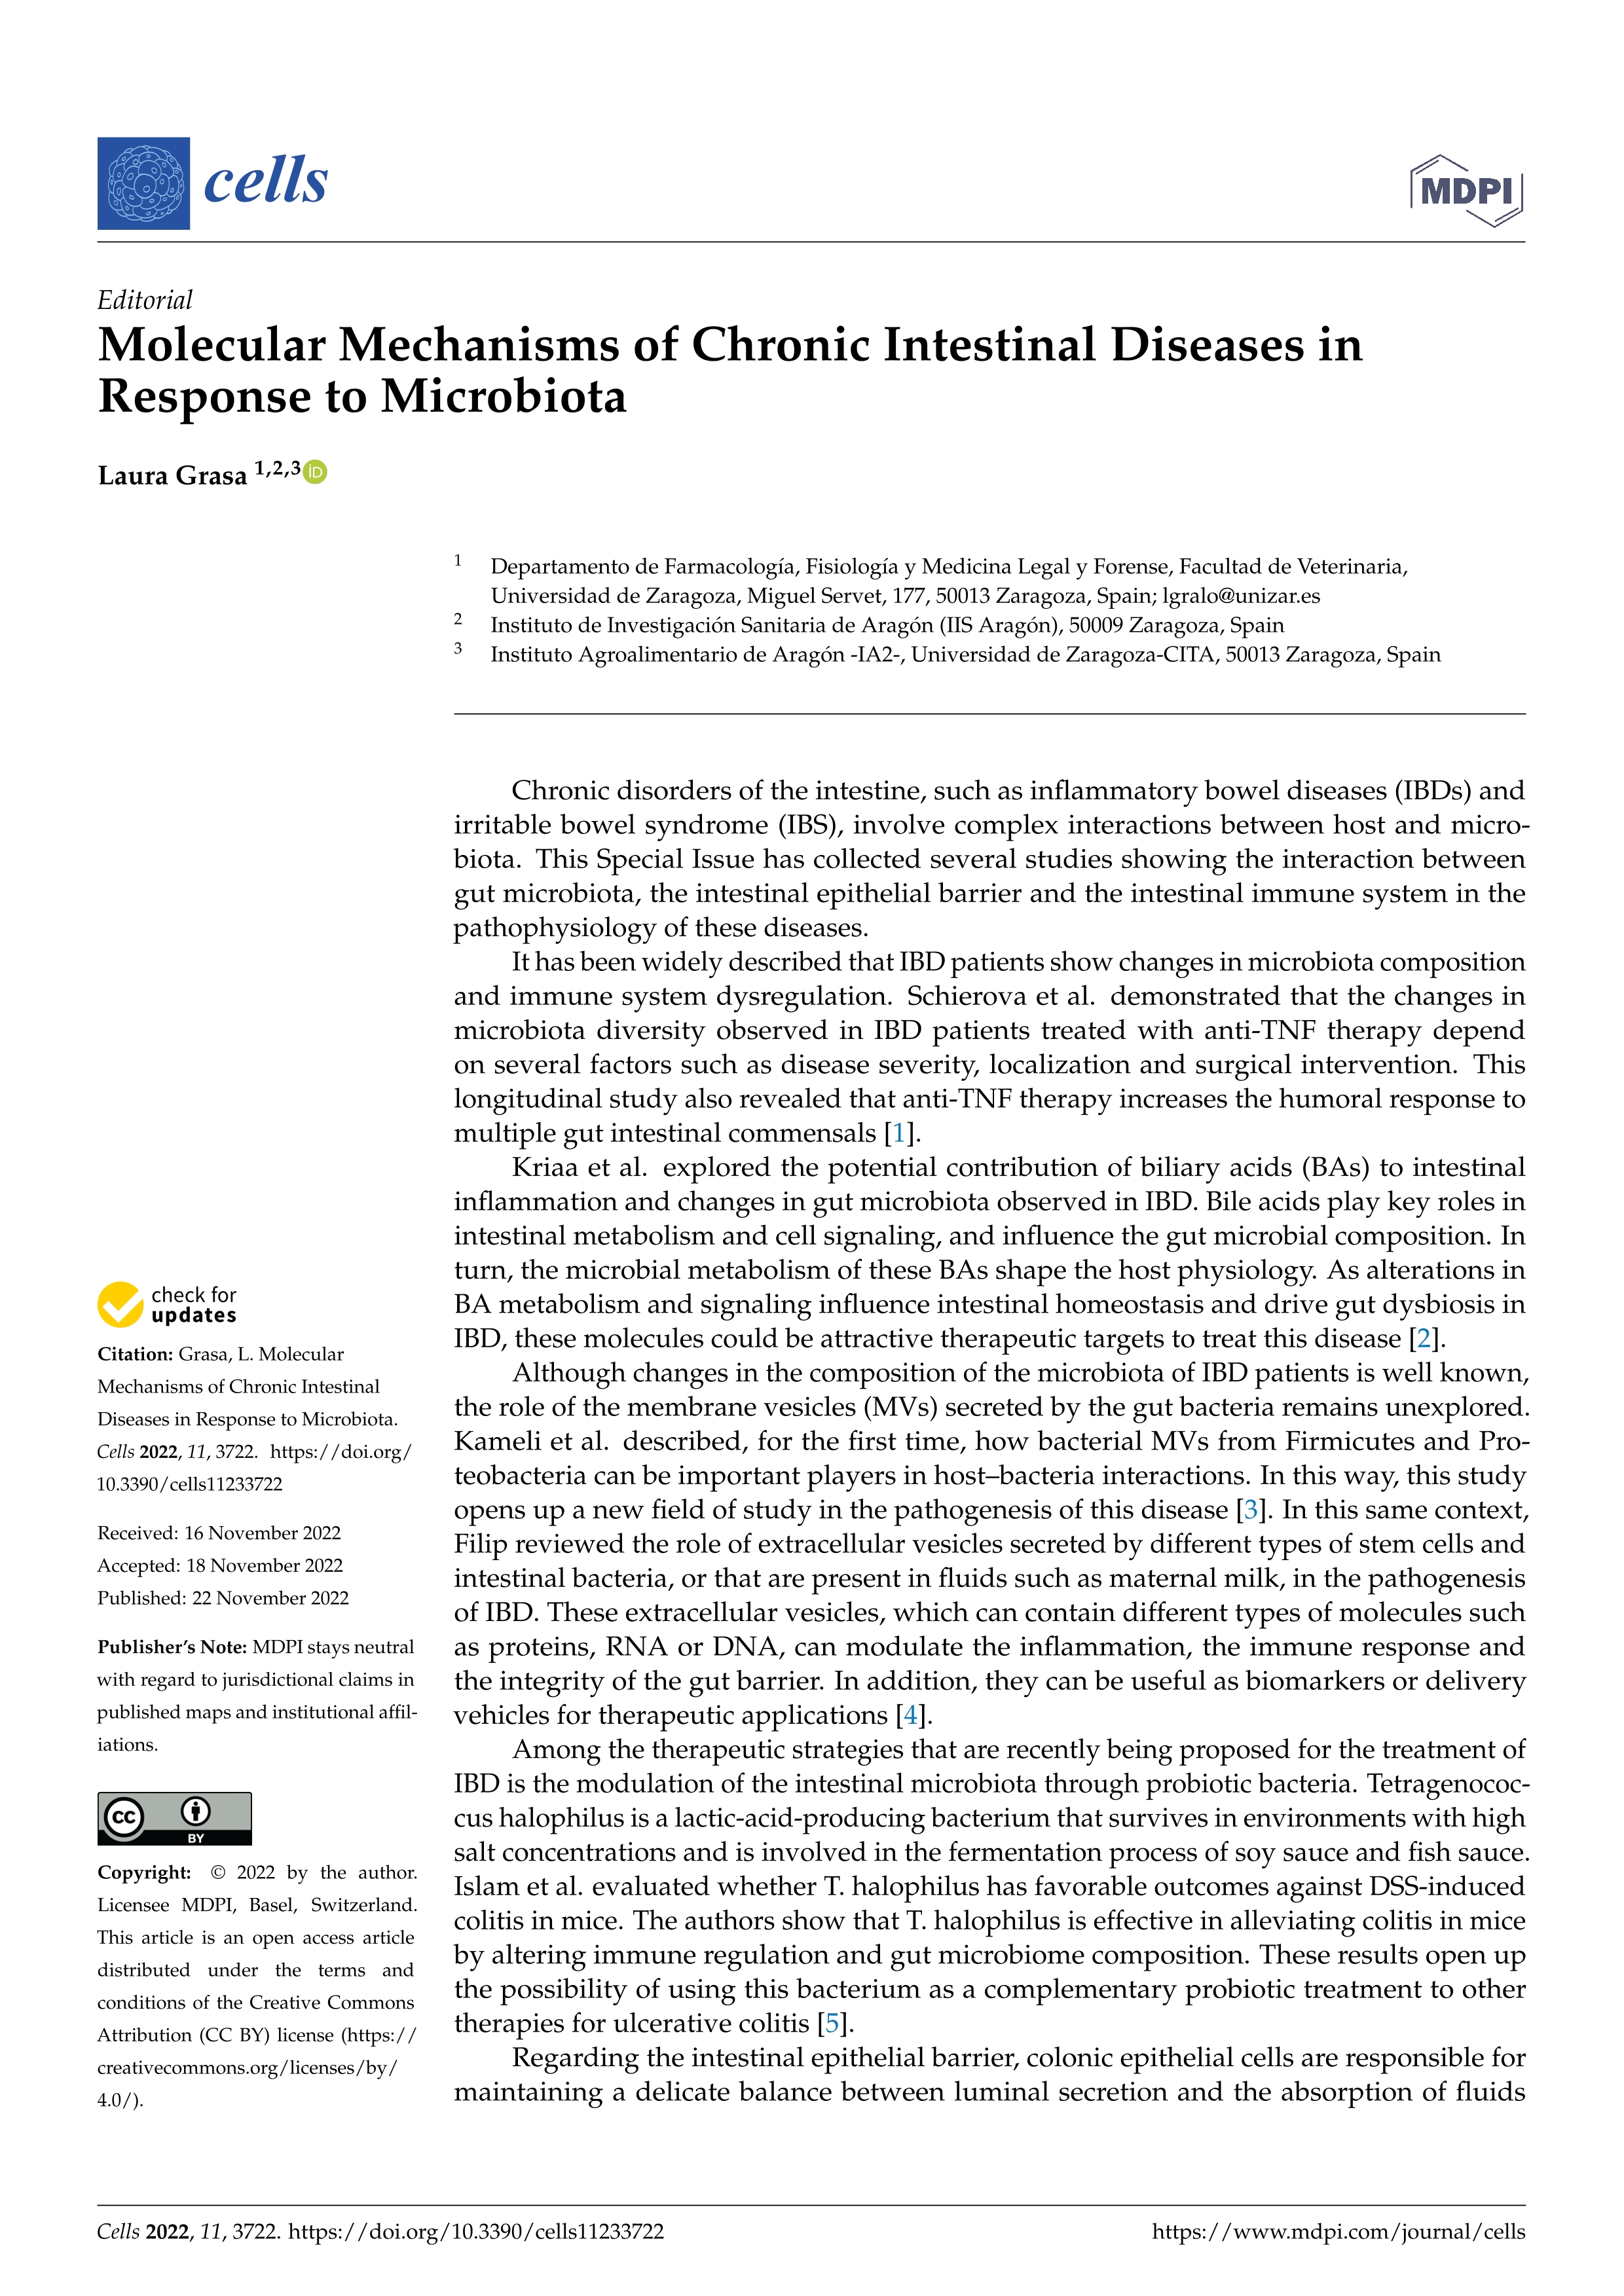 Molecular Mechanisms of Chronic Intestinal Diseases in Response to Microbiota